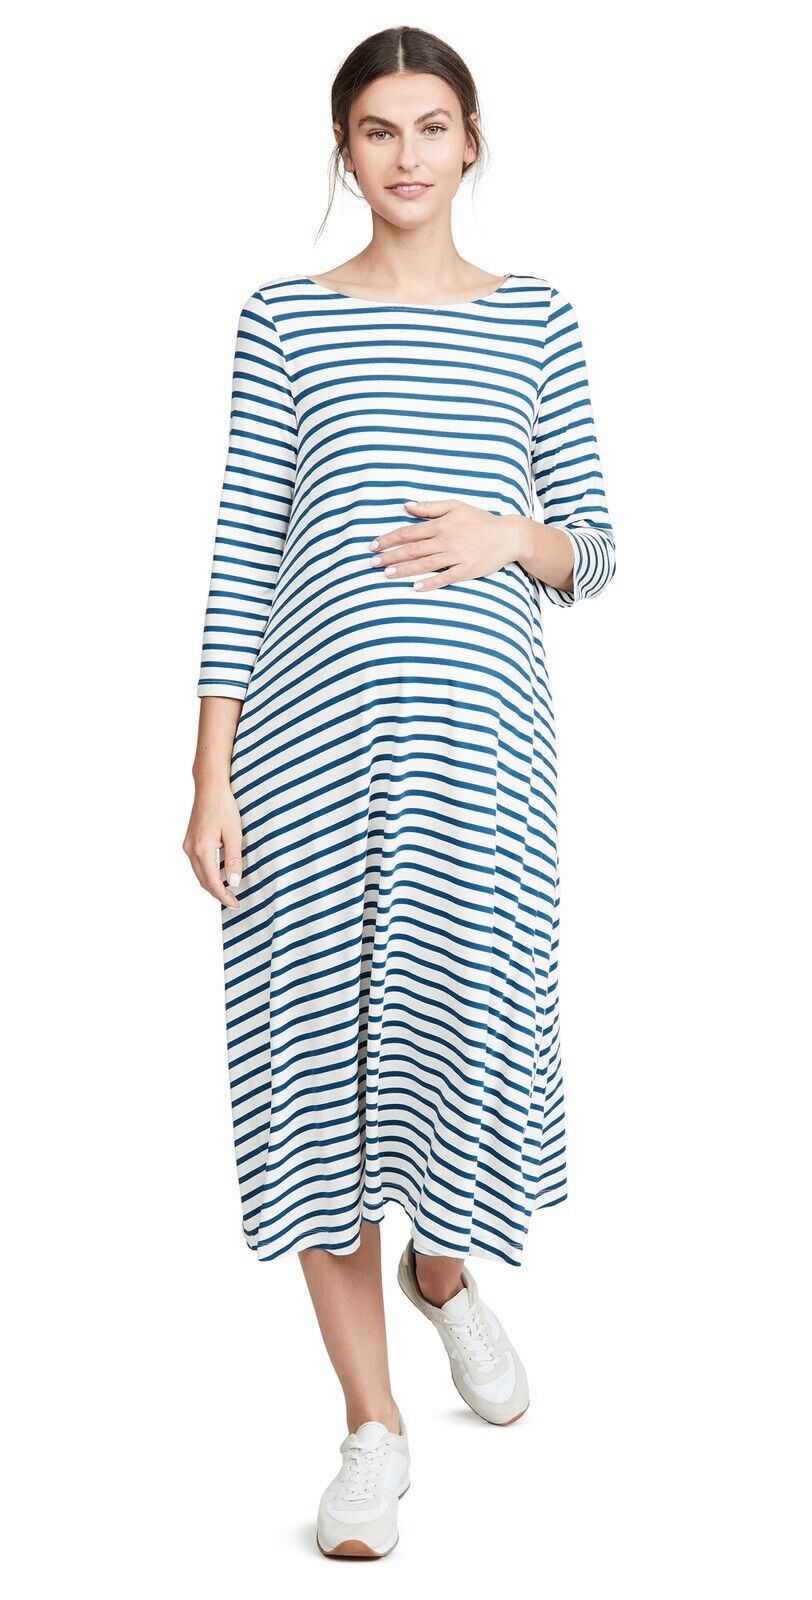 Hatch Maternity Women’s THE MARINA DRESS Ivory/Blue Stripe Size 0 (XS/0-2) NEW